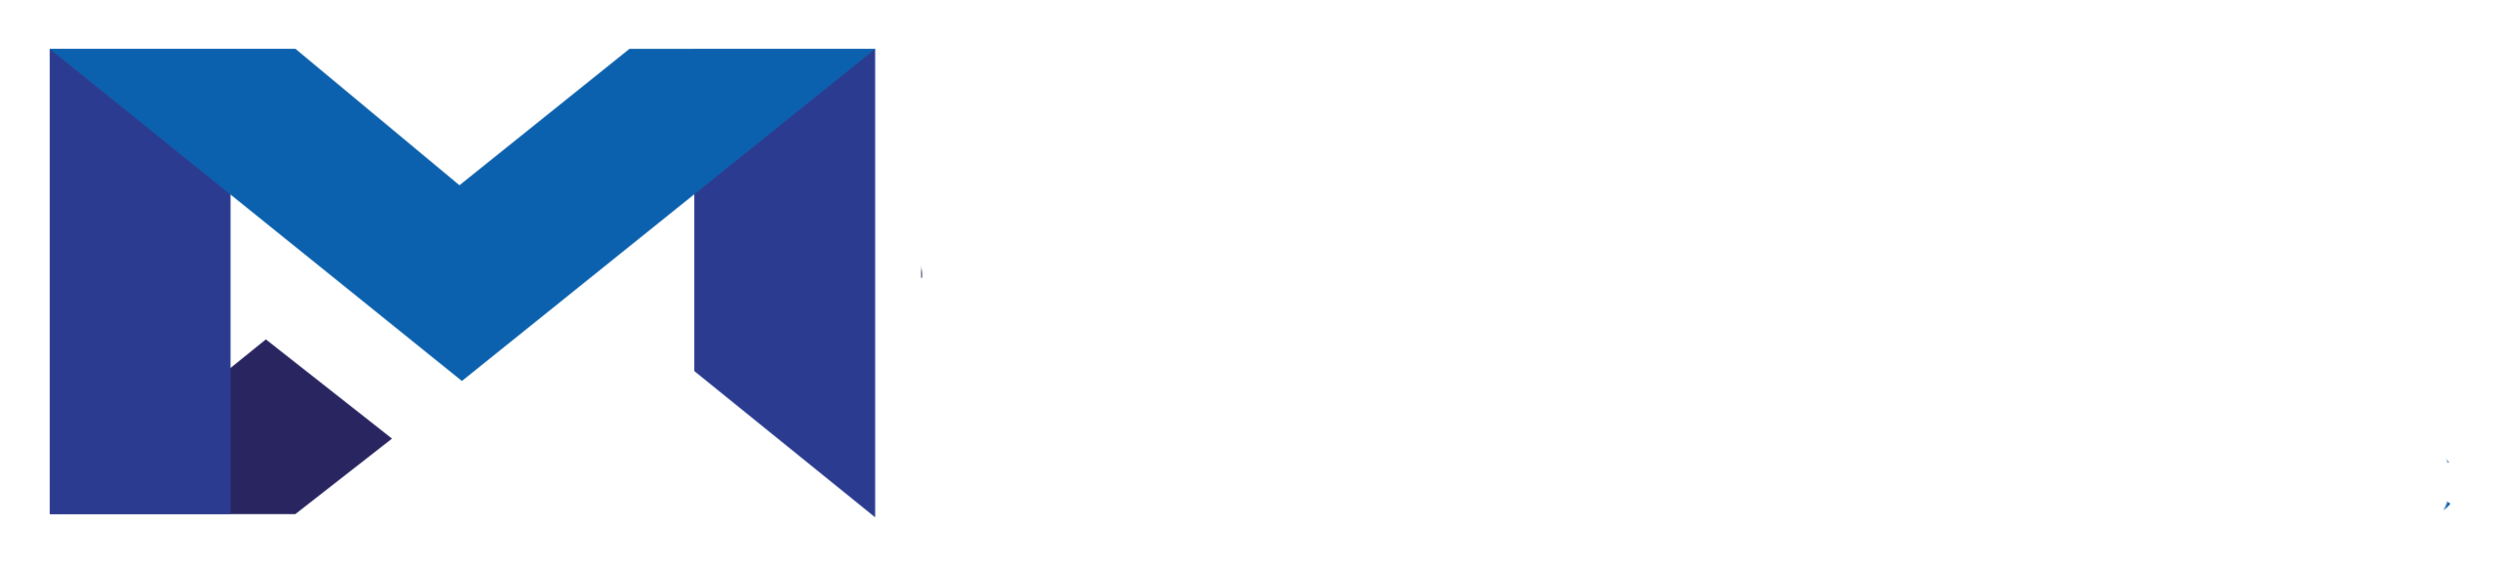 Murphy Construction Services Inc